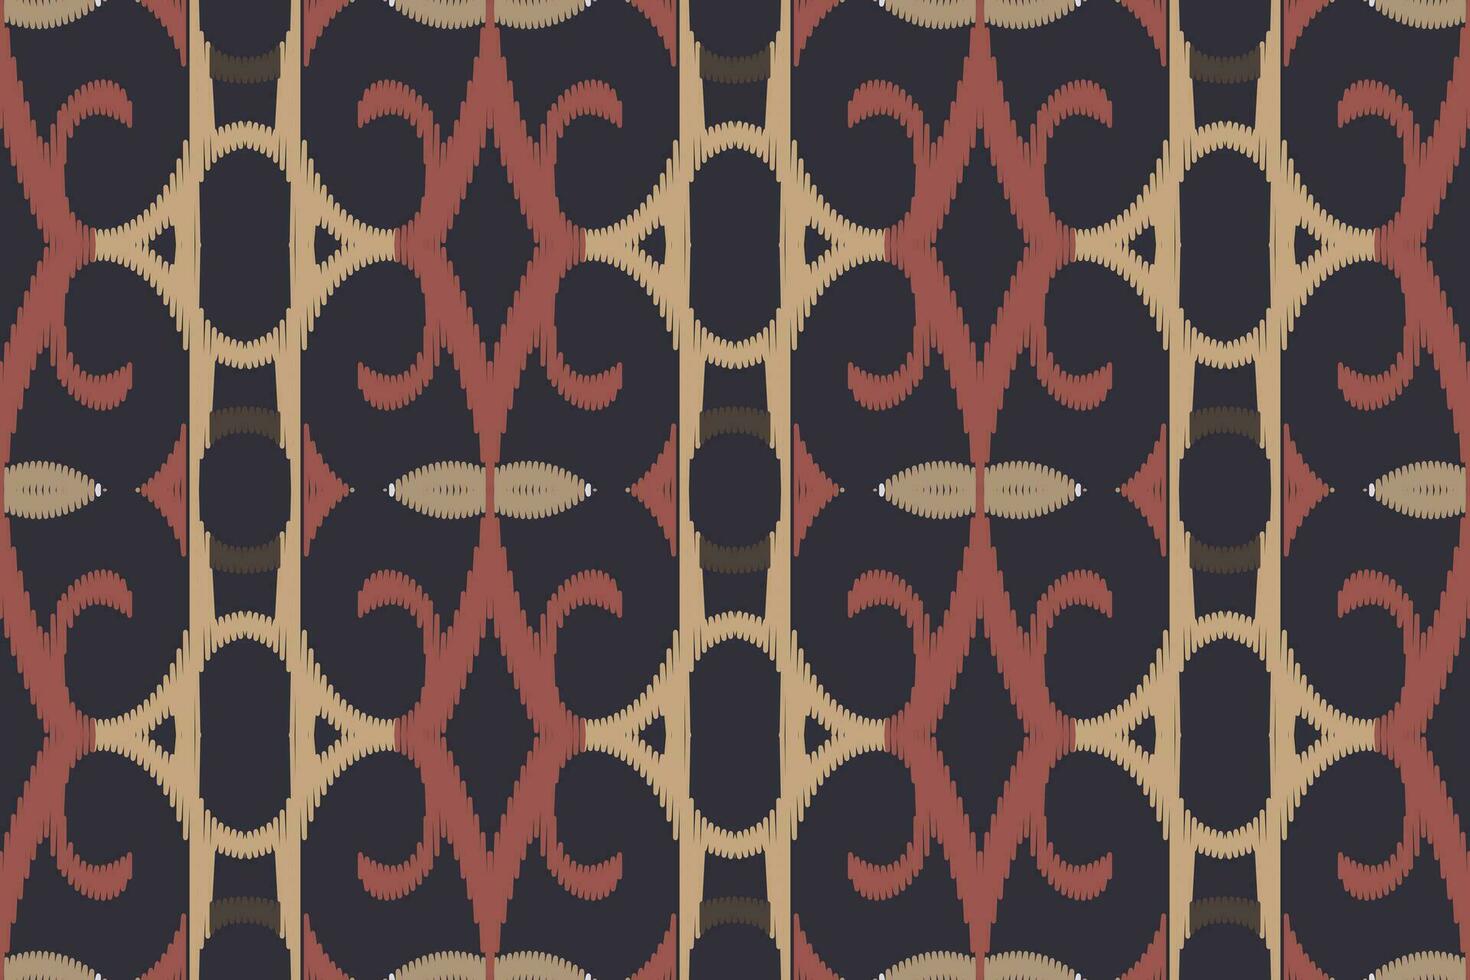 motivo ikat cachemir bordado antecedentes. ikat textura geométrico étnico oriental modelo tradicional. ikat azteca estilo resumen diseño para impresión textura,tela,sari,sari,alfombra. vector